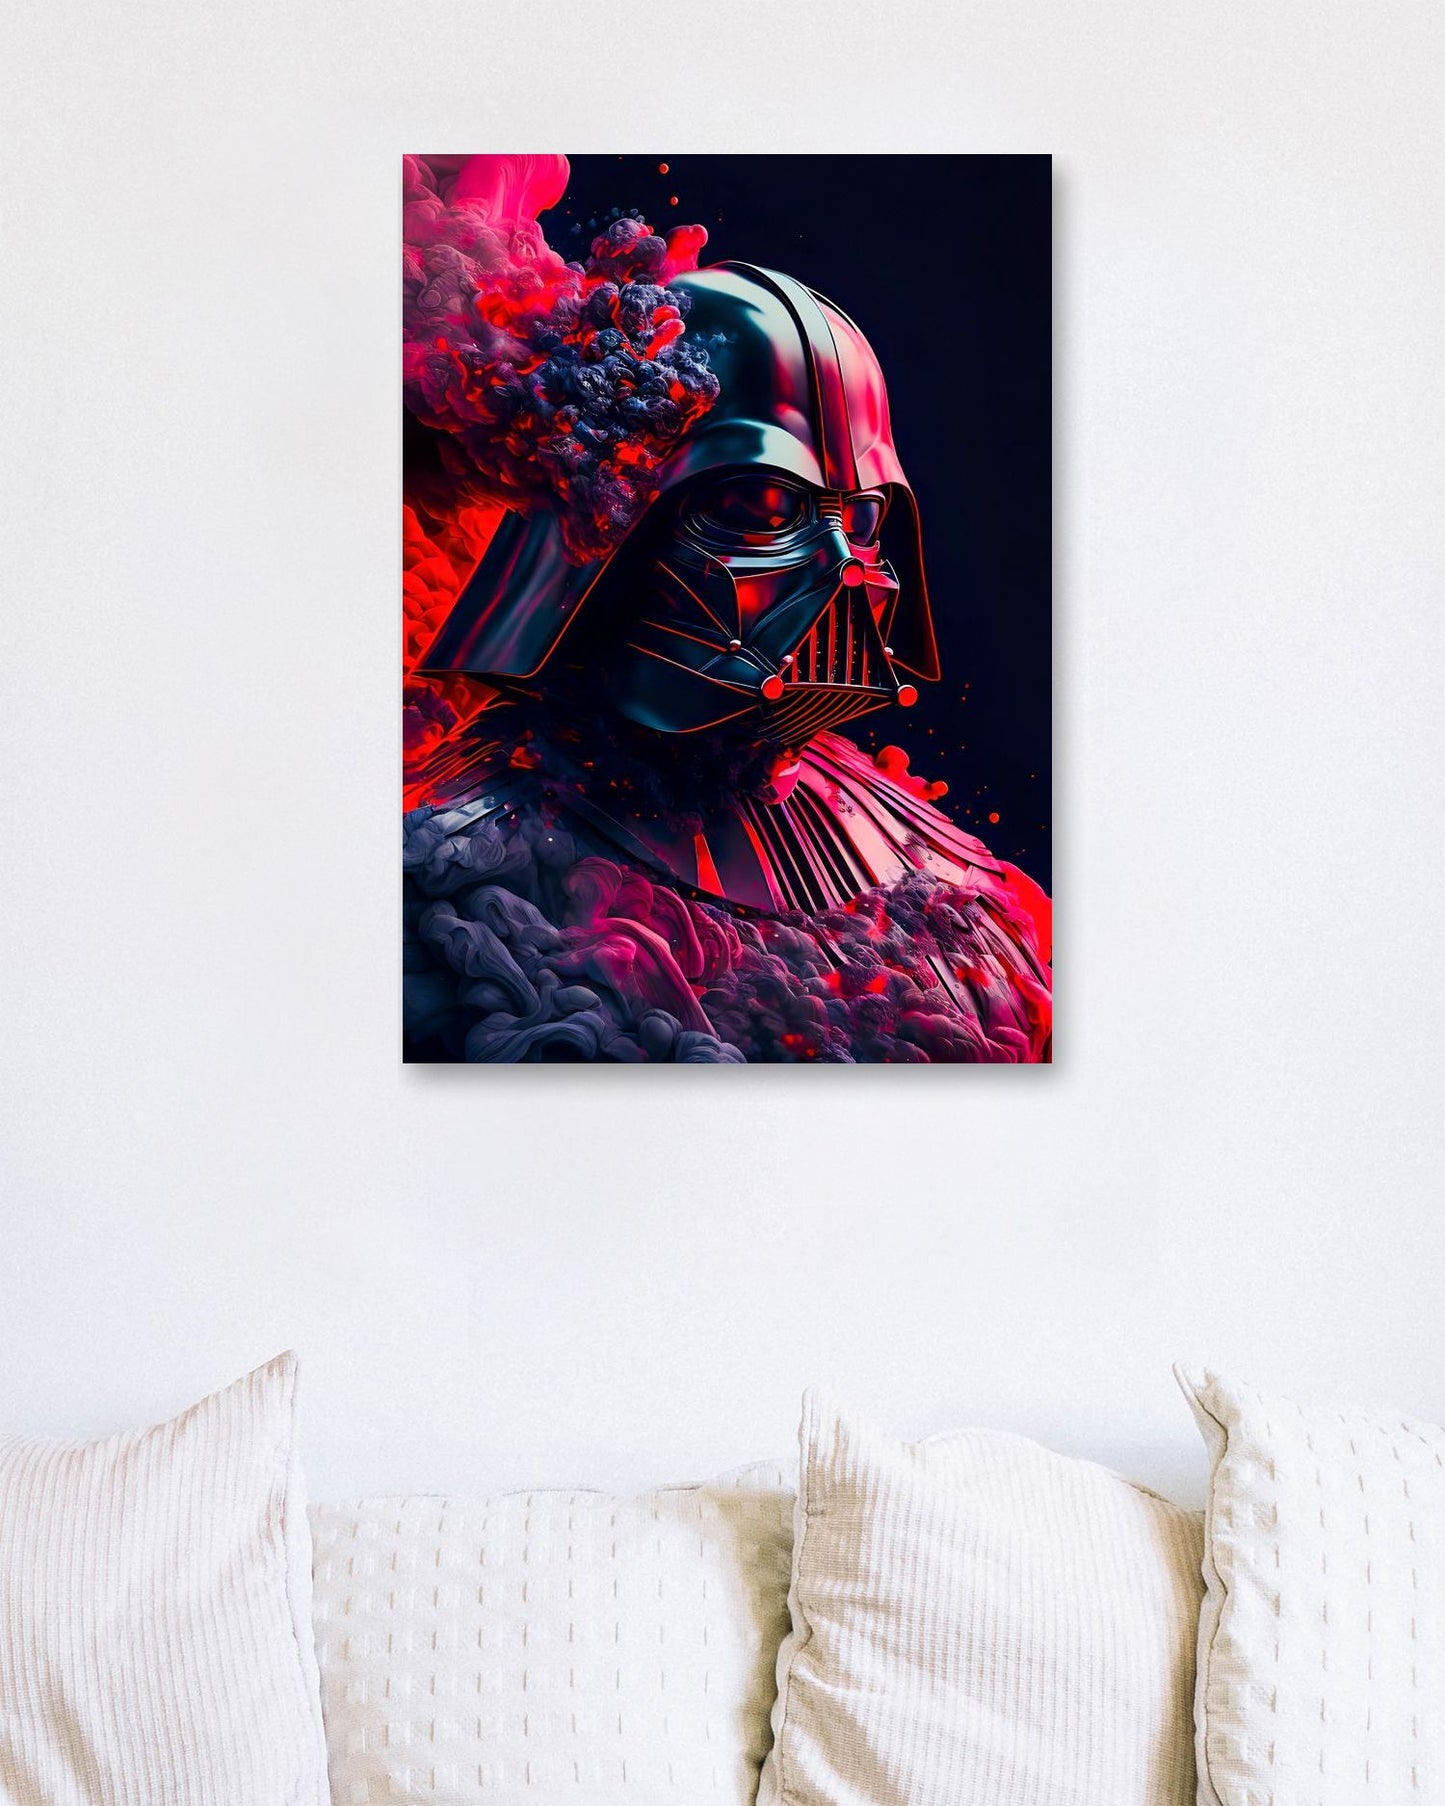 Darth Vader 2 - @LightCreative